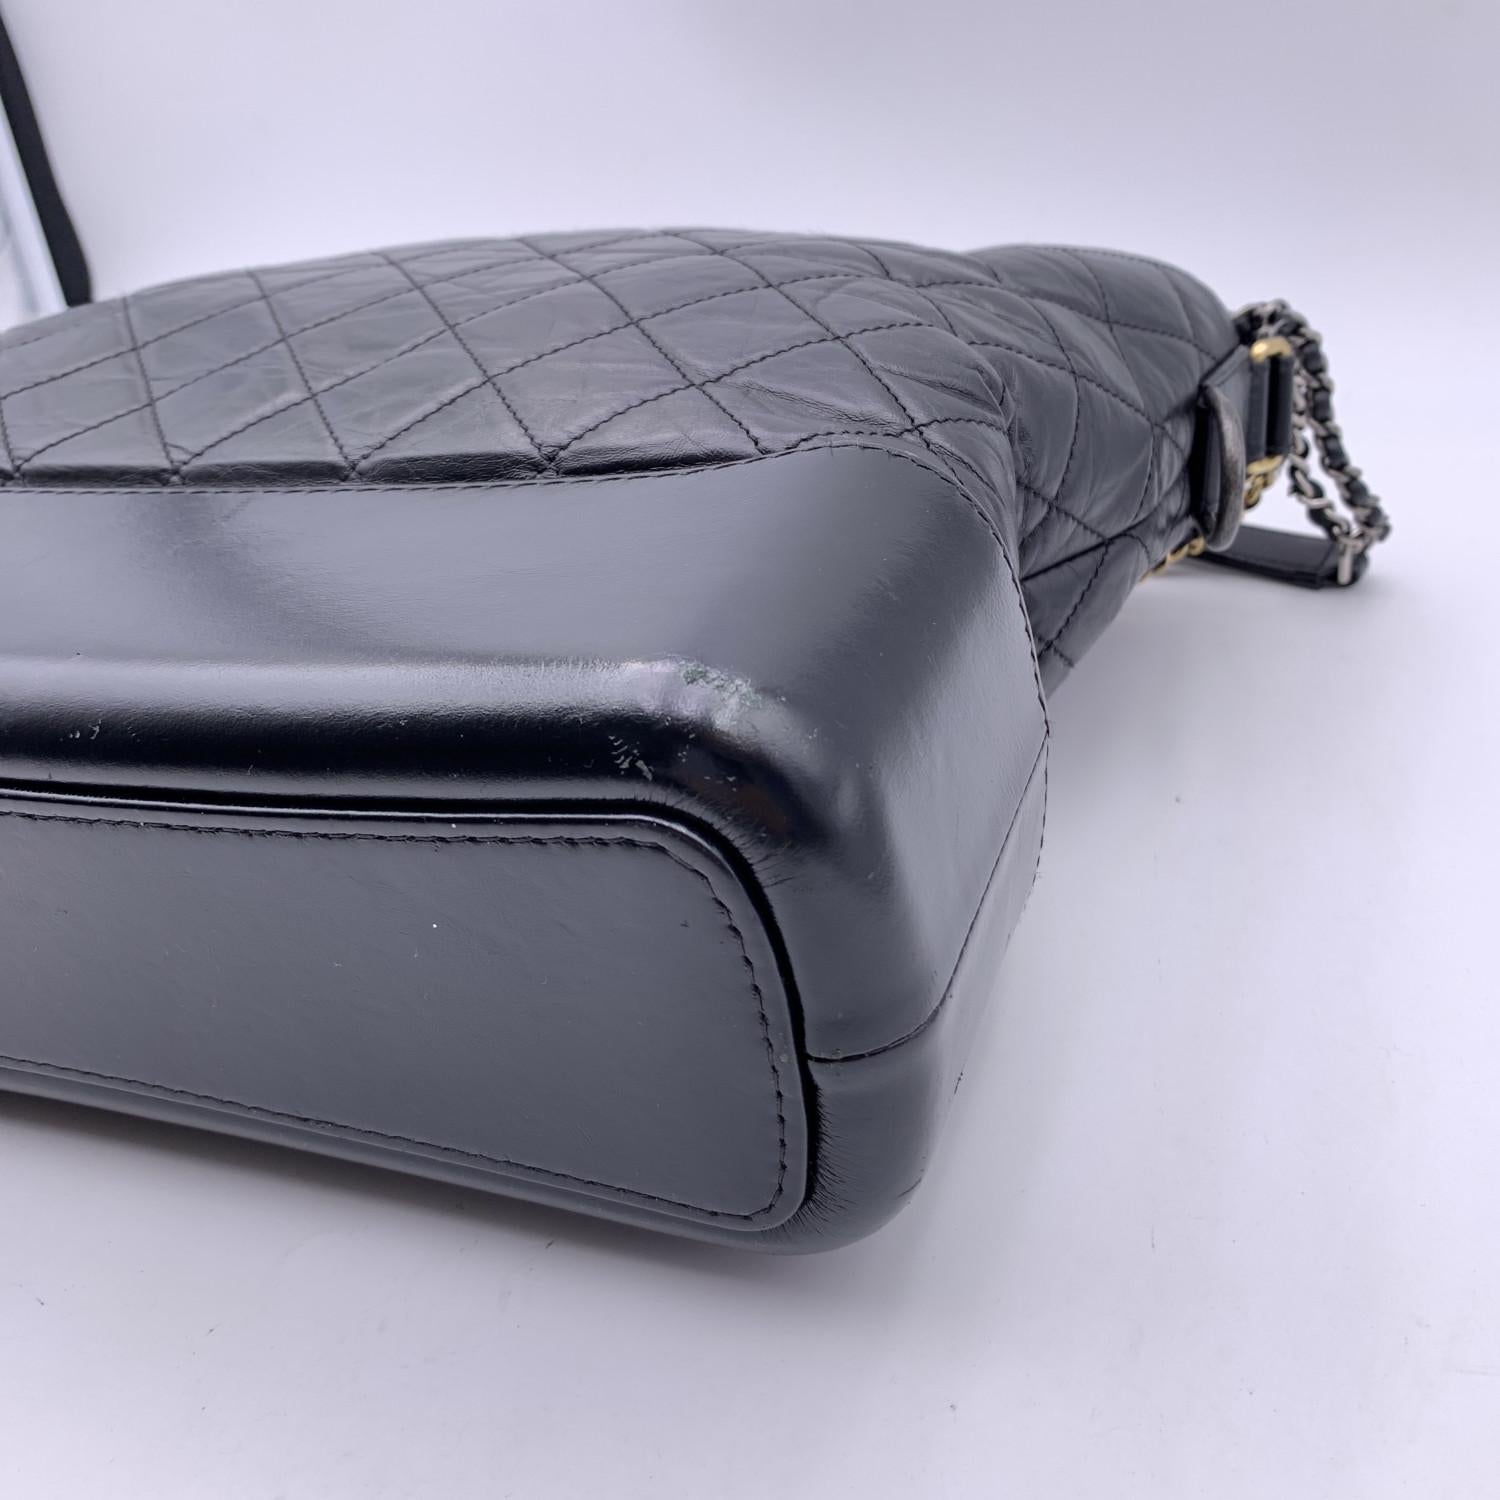 Chanel Black Quilted Leather Gabrielle Large Hobo Shoulder Bag For Sale 8